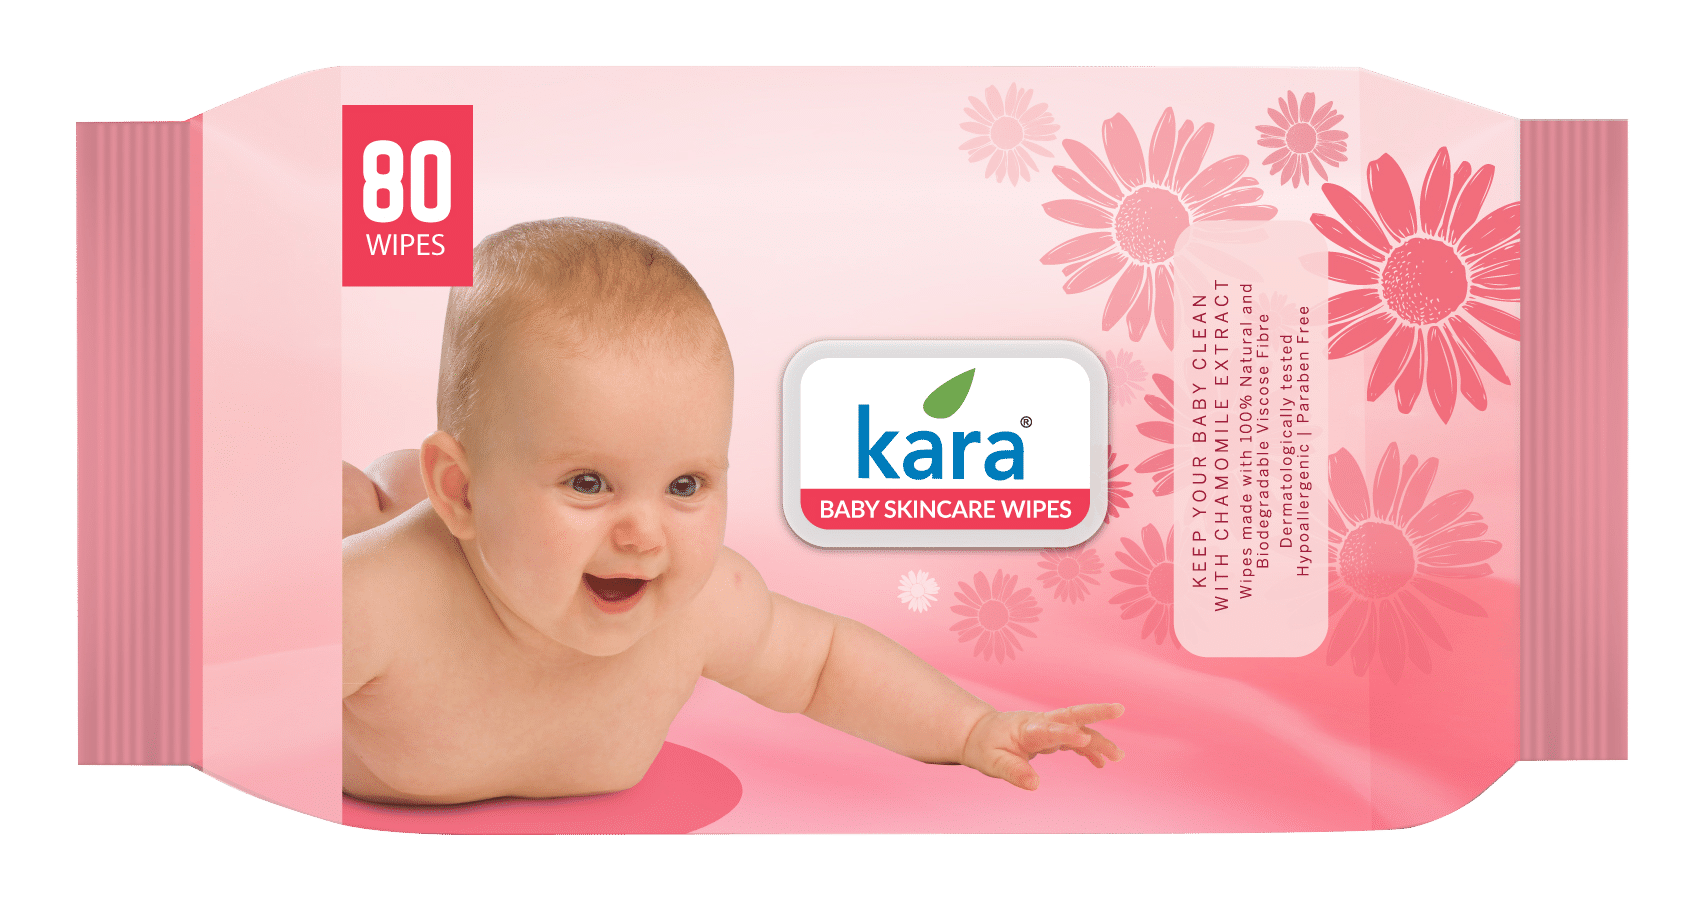 Kara Baby Skincare Wipes - 80 wipes